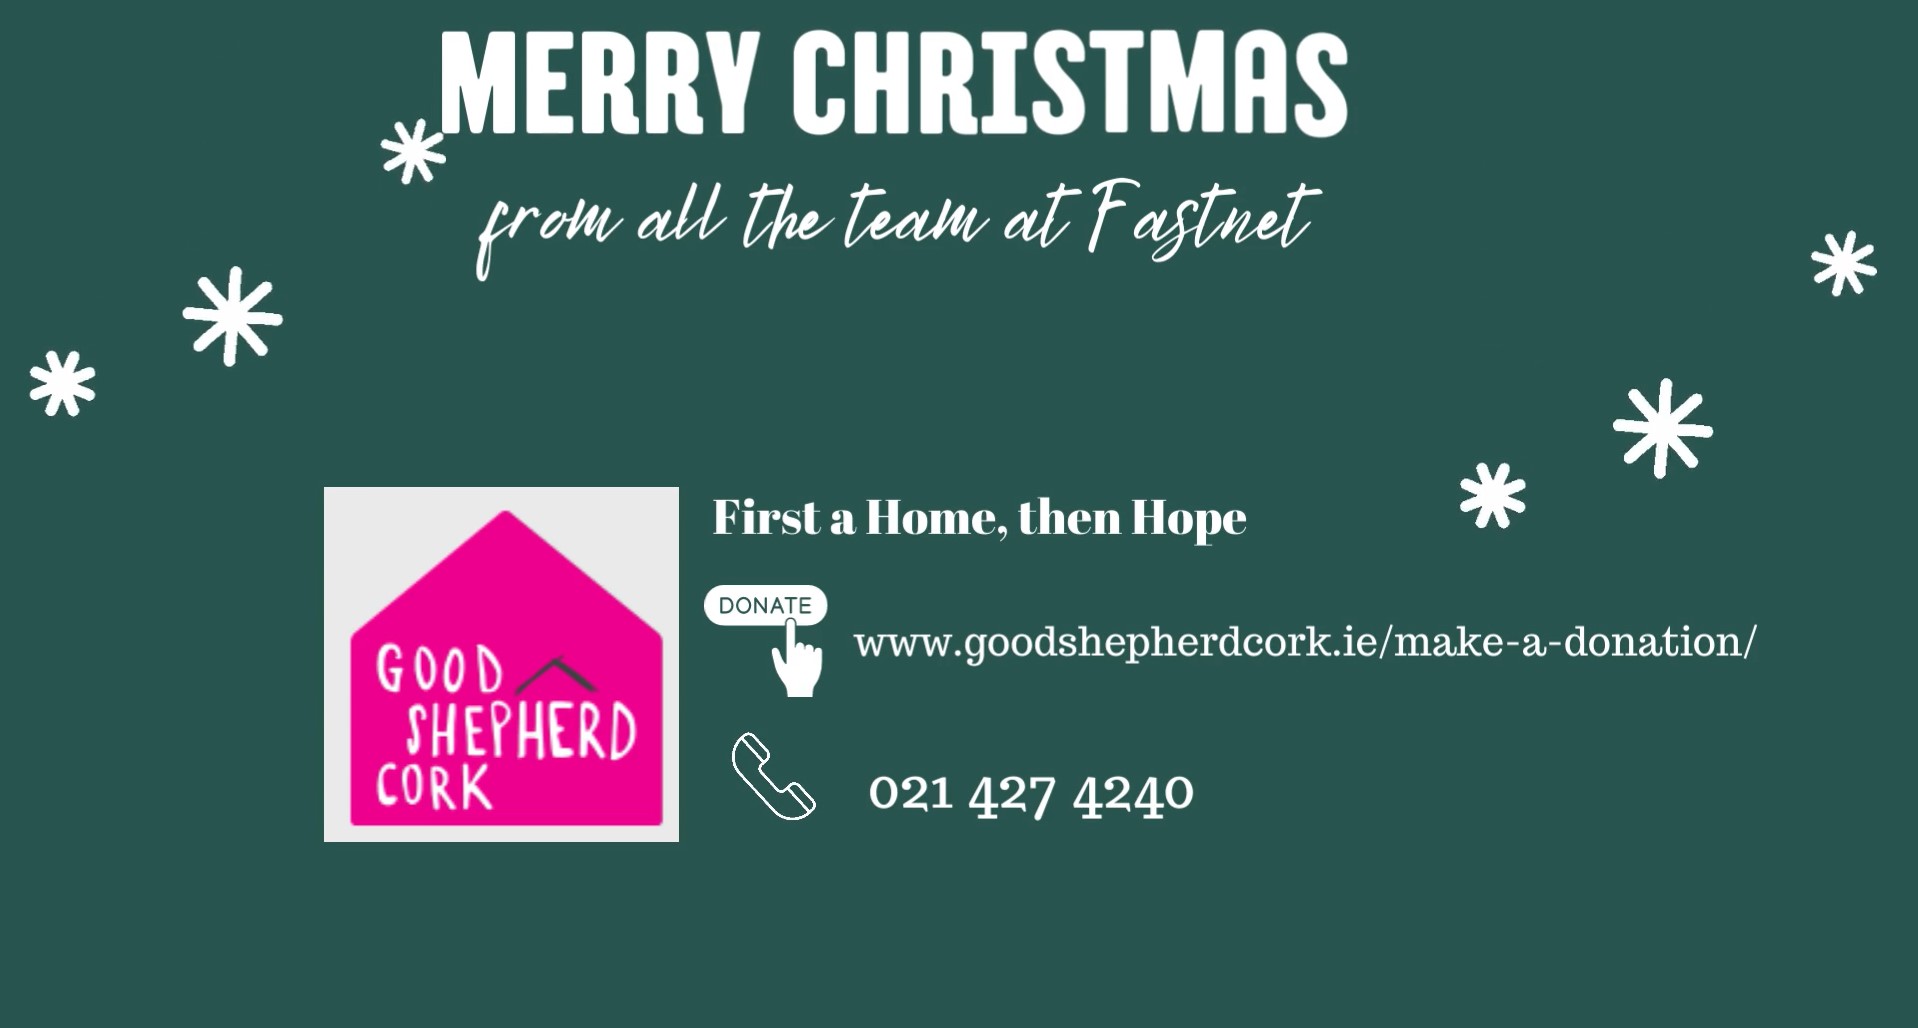 Fastnet Get Festive at Good Shepherd Cork